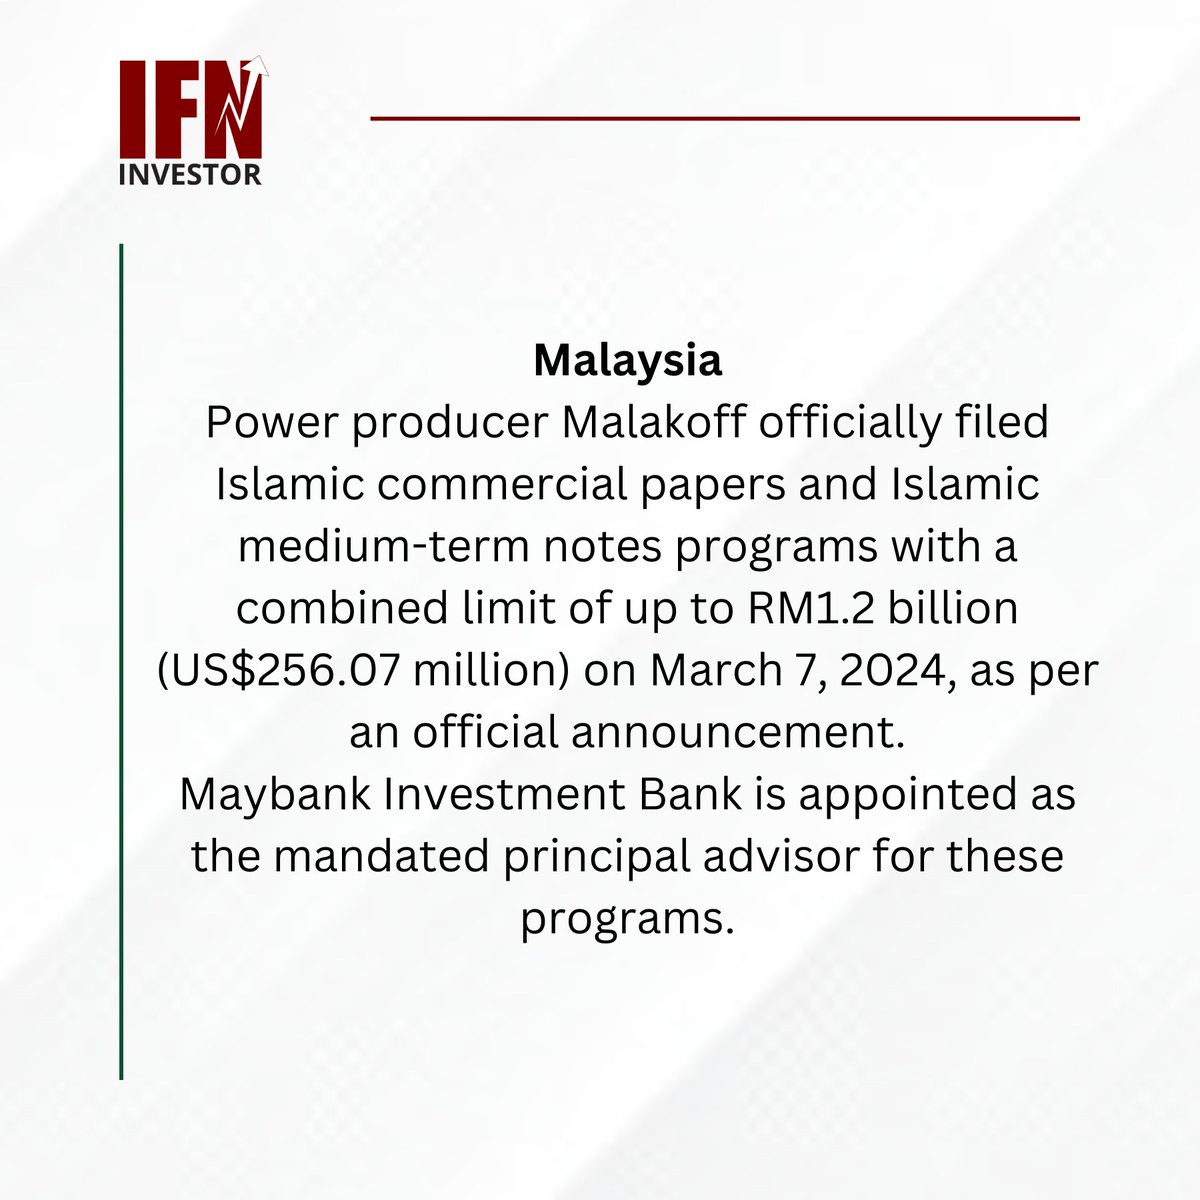 Latest News: Malakoff Launches Islamic Commercial Papers and Medium-Term Notes Programs.

#IFNInvestor #REDmoney #IFN #IslamicFinance #Malakoff #MaybankInvestmentBank